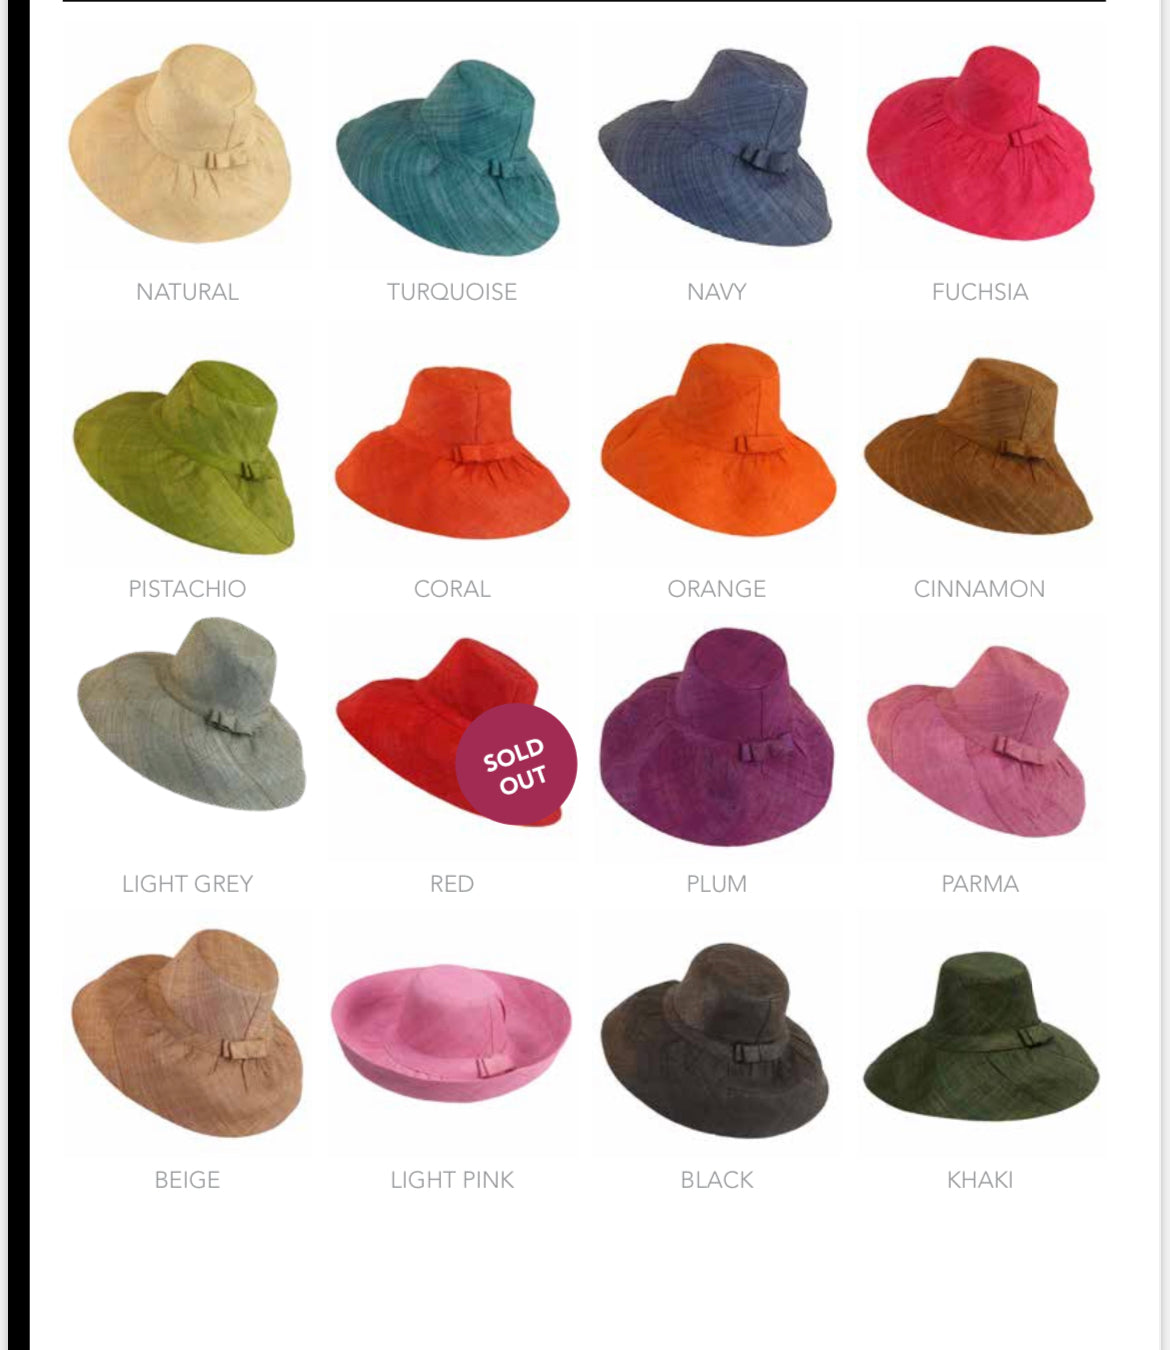 demi capeline staw hat with bow in natural, turquoise, navy, fuchsia, pistachio, coral, orange, cinnamon, light grey, plum, parma, beige light pink, black khaki